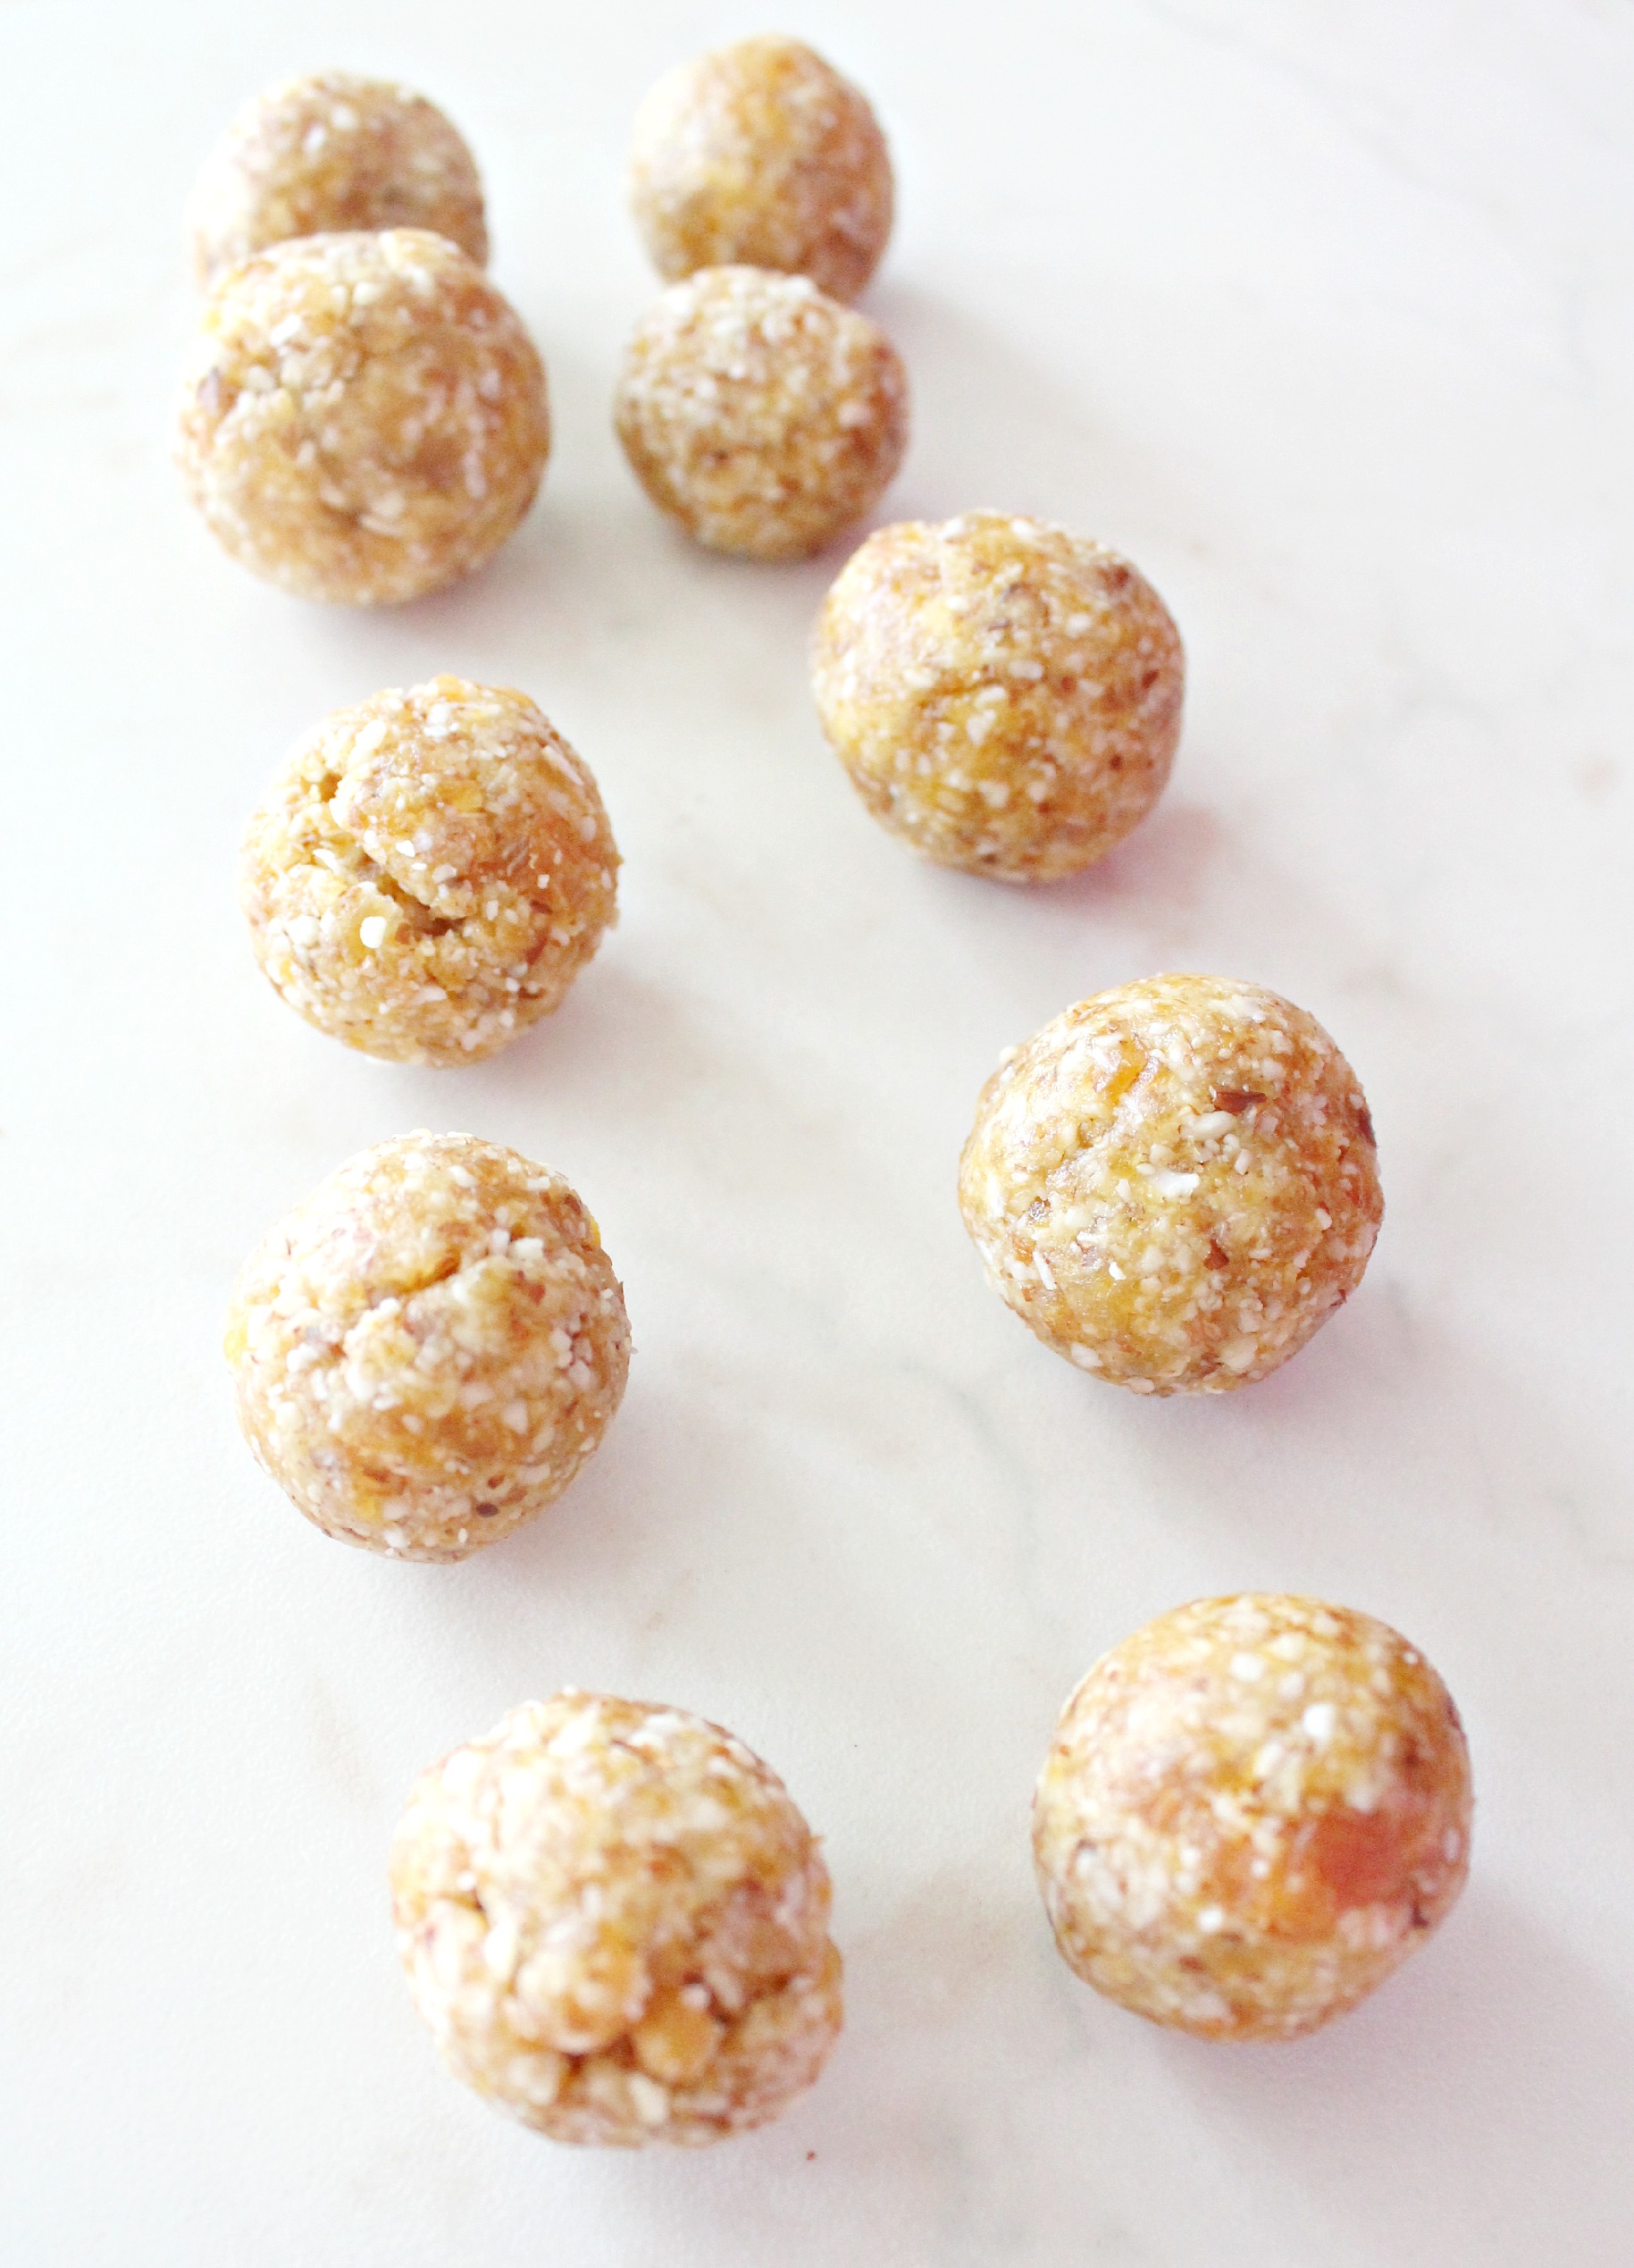 Almond apricot energy balls